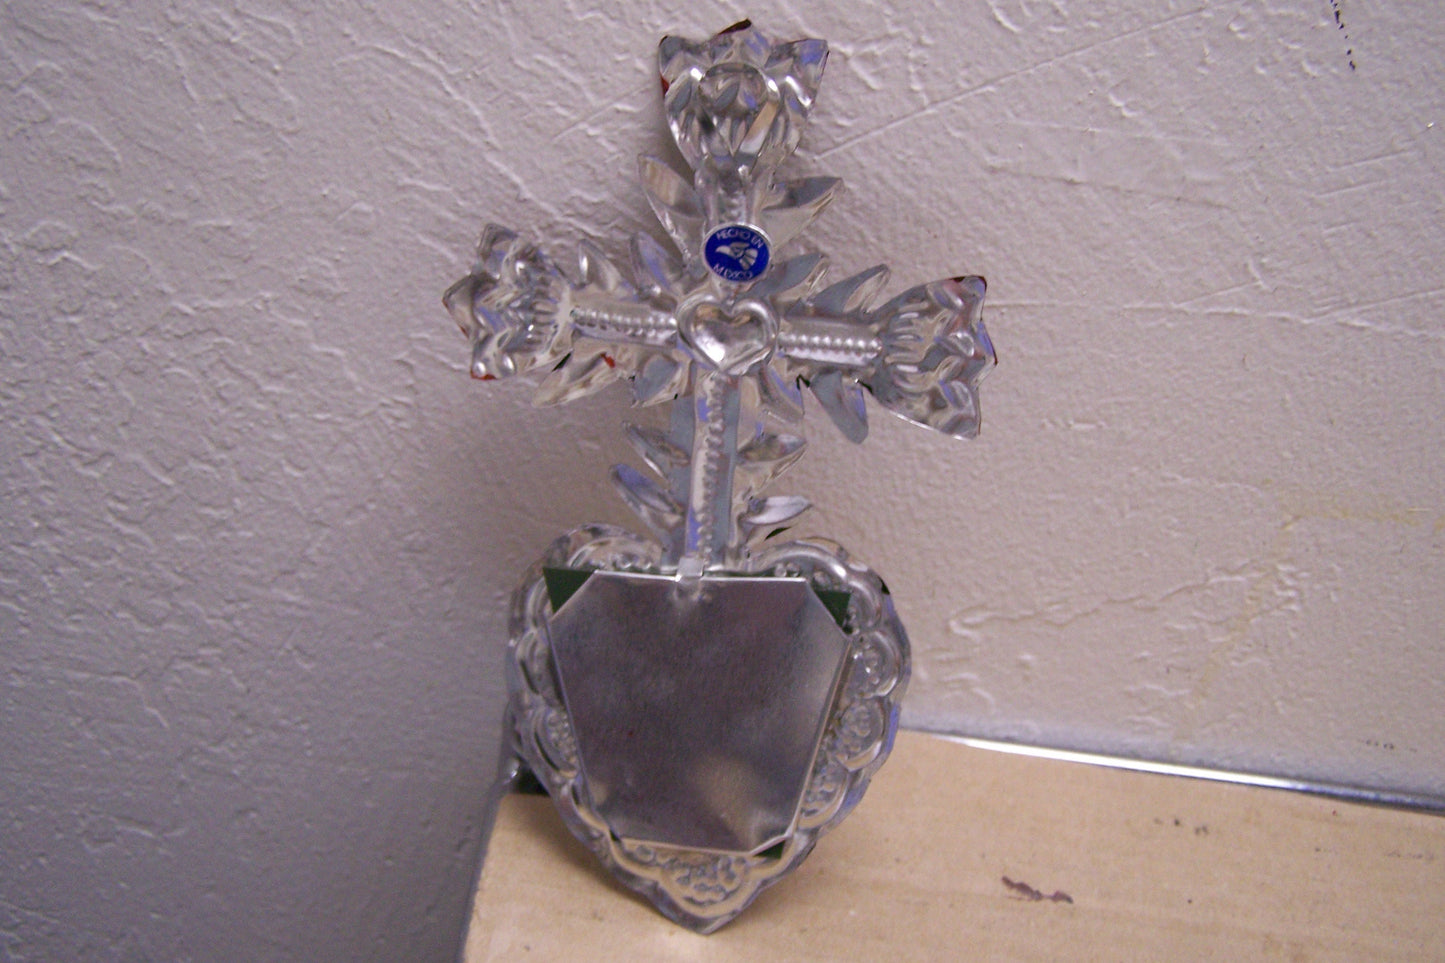 Tin Painted Sacred Heart Mirror - Foliated Cross - Mexico